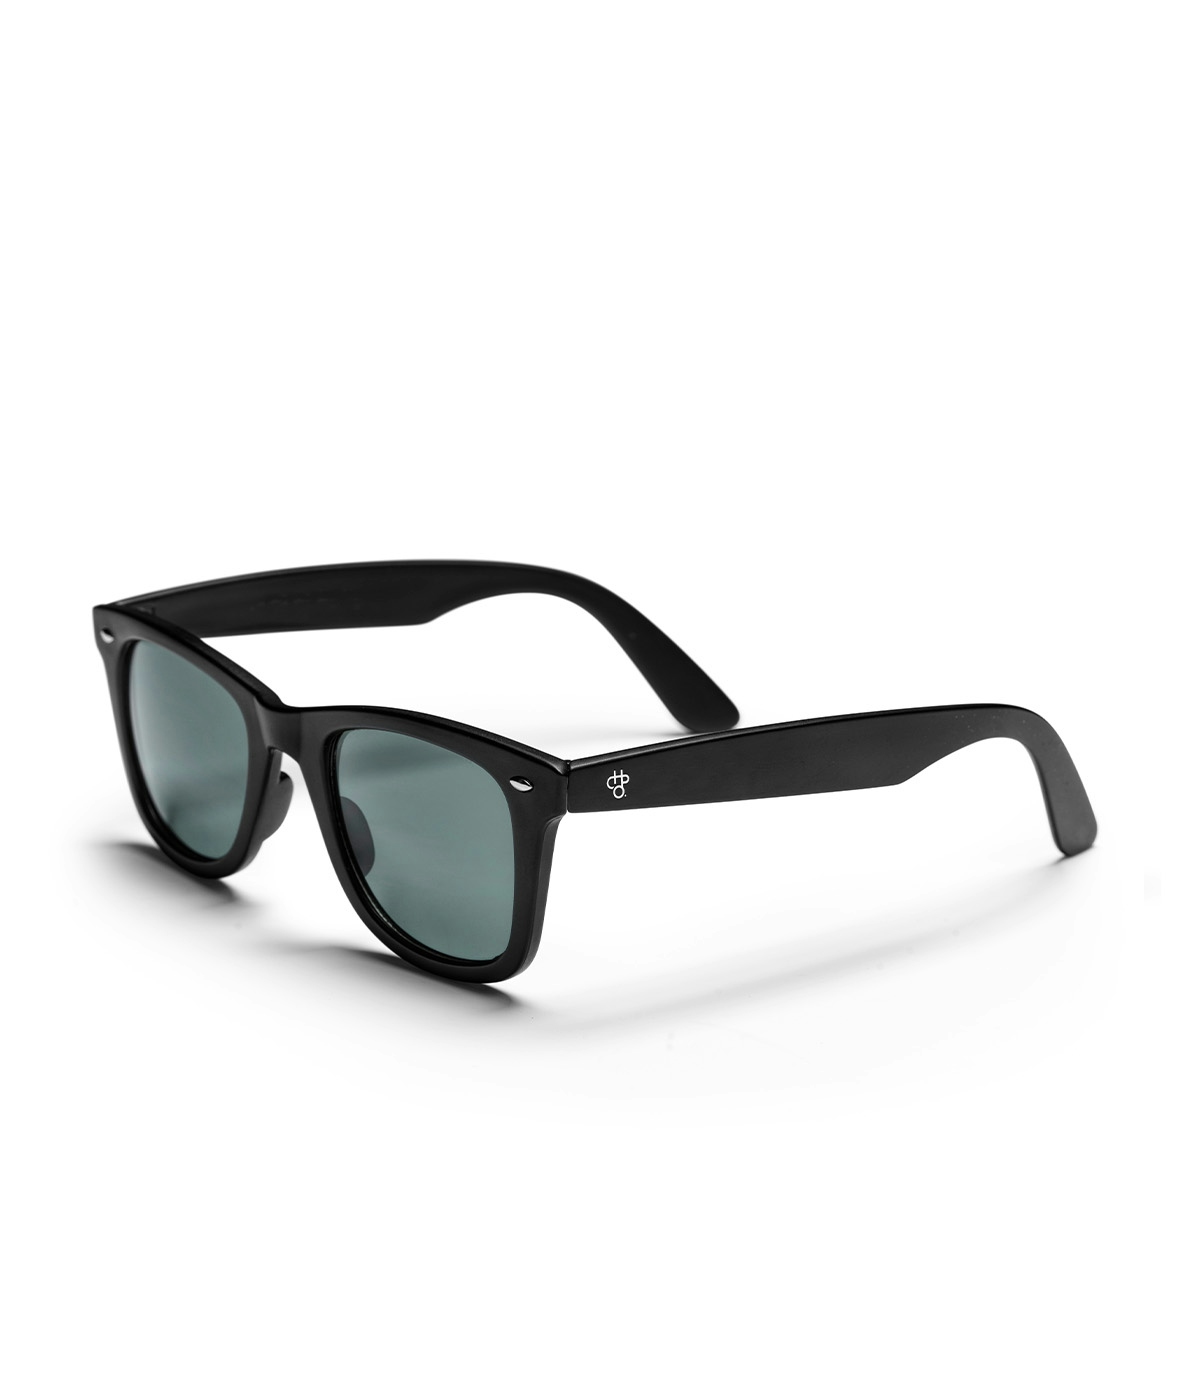 Chpo Brand Sunglasses Noway Black/Black